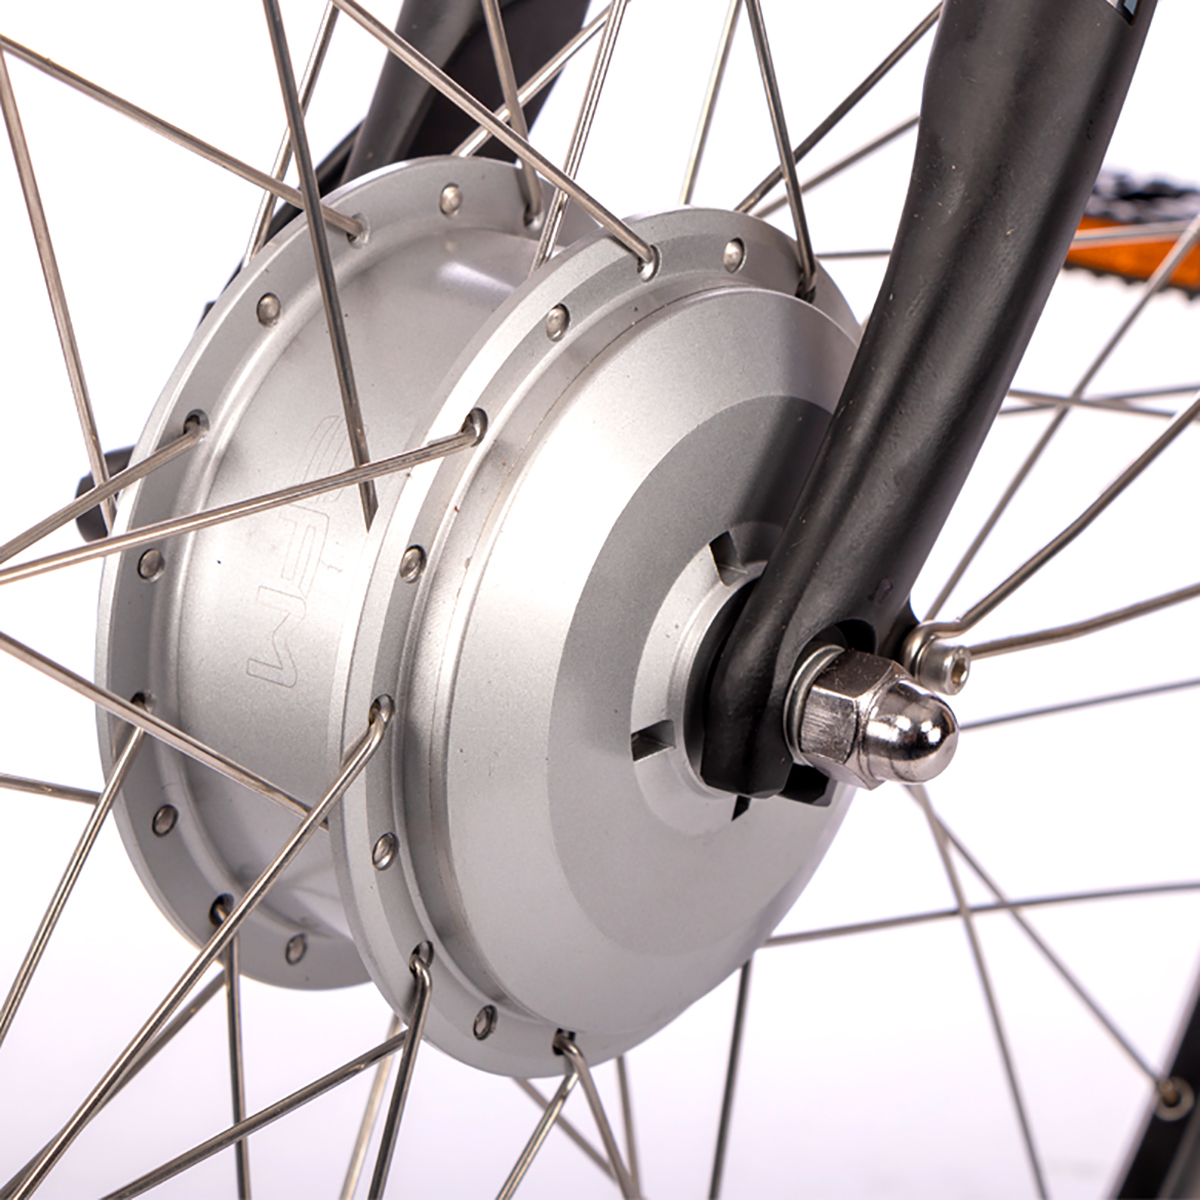 SAXONETTE Advanced Plus (Laufradgröße: Wh, 375 Zoll, Rahmenhöhe: 28 Citybike Silber) 50 Damen-Rad, cm